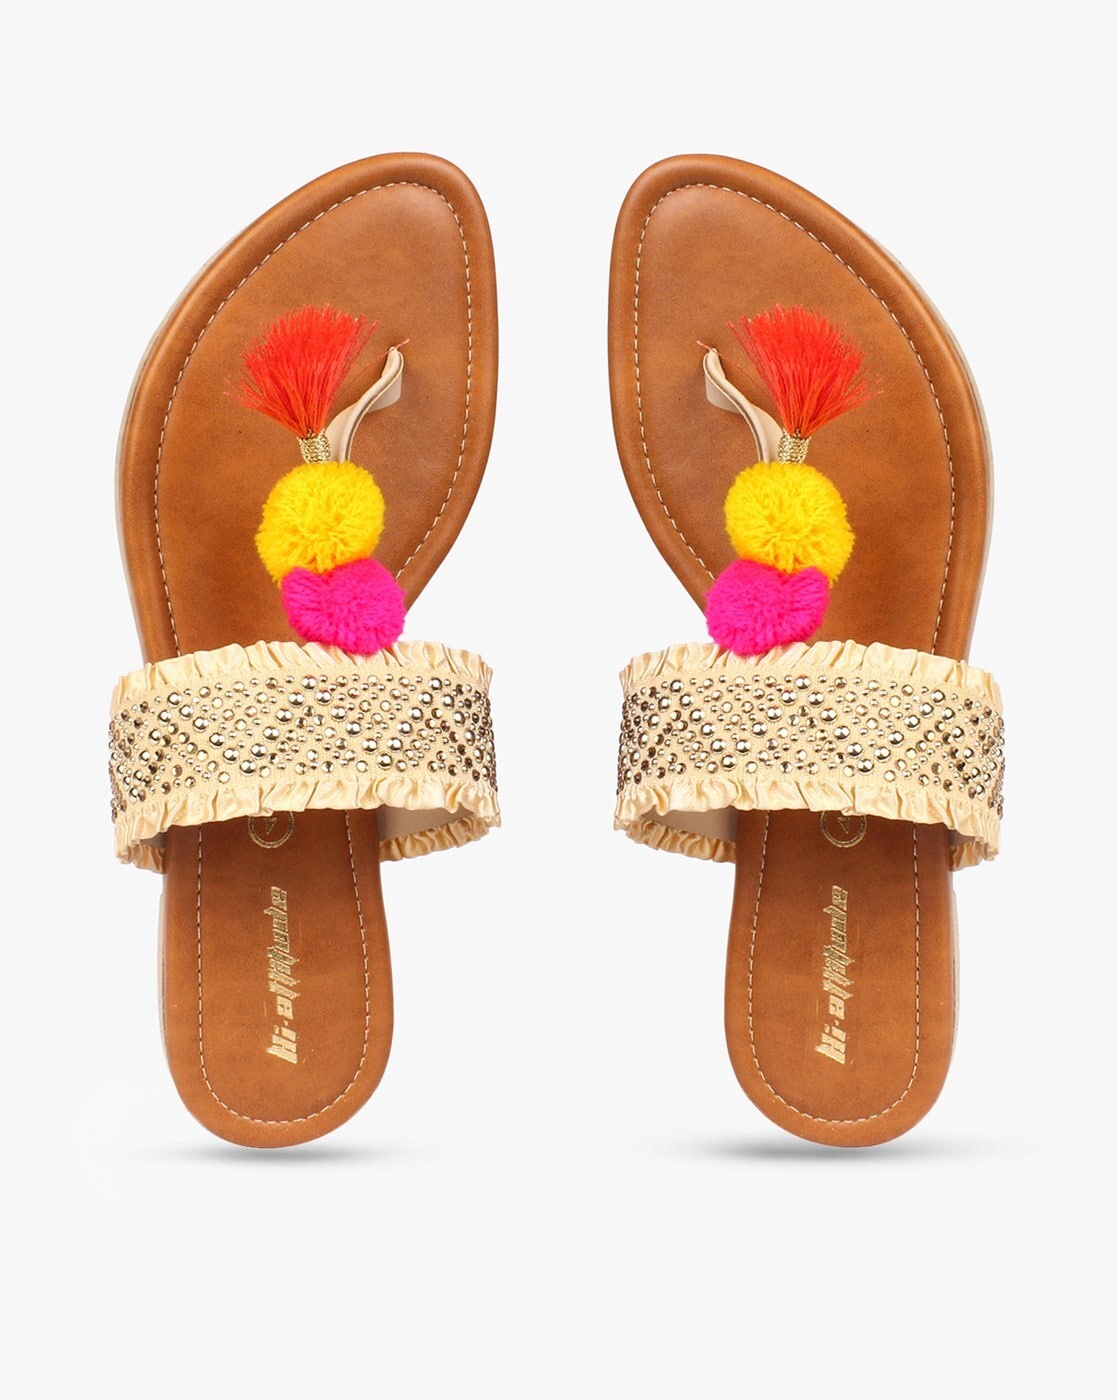 Buy Sandals for Women by HI-ATTITUDE Online | Ajio.com